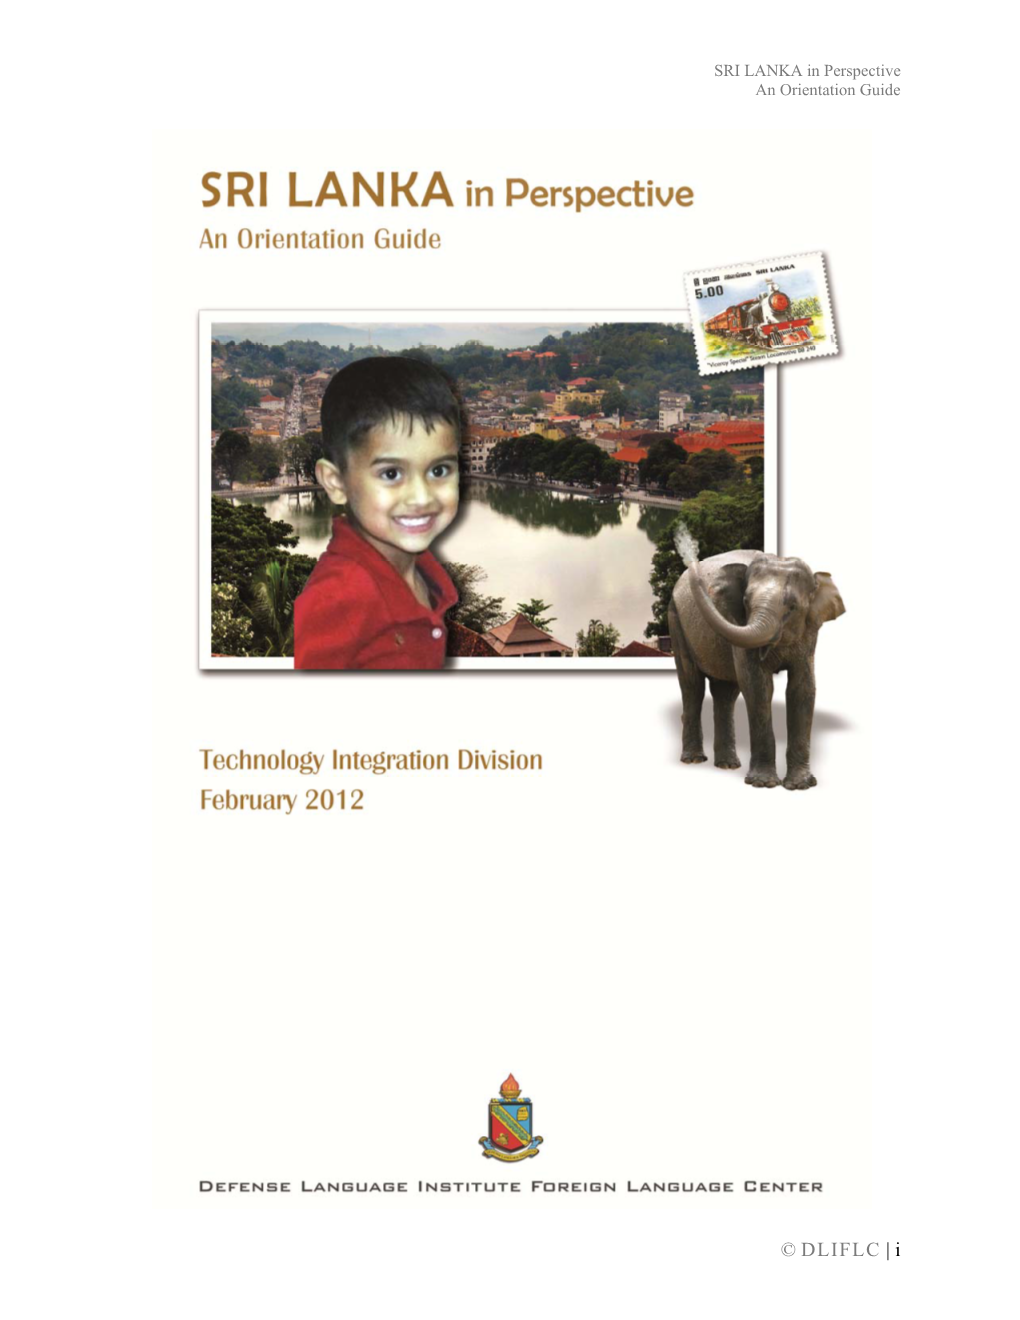 © DLIFLC | I SRI LANKA in Perspective an Orientation Guide